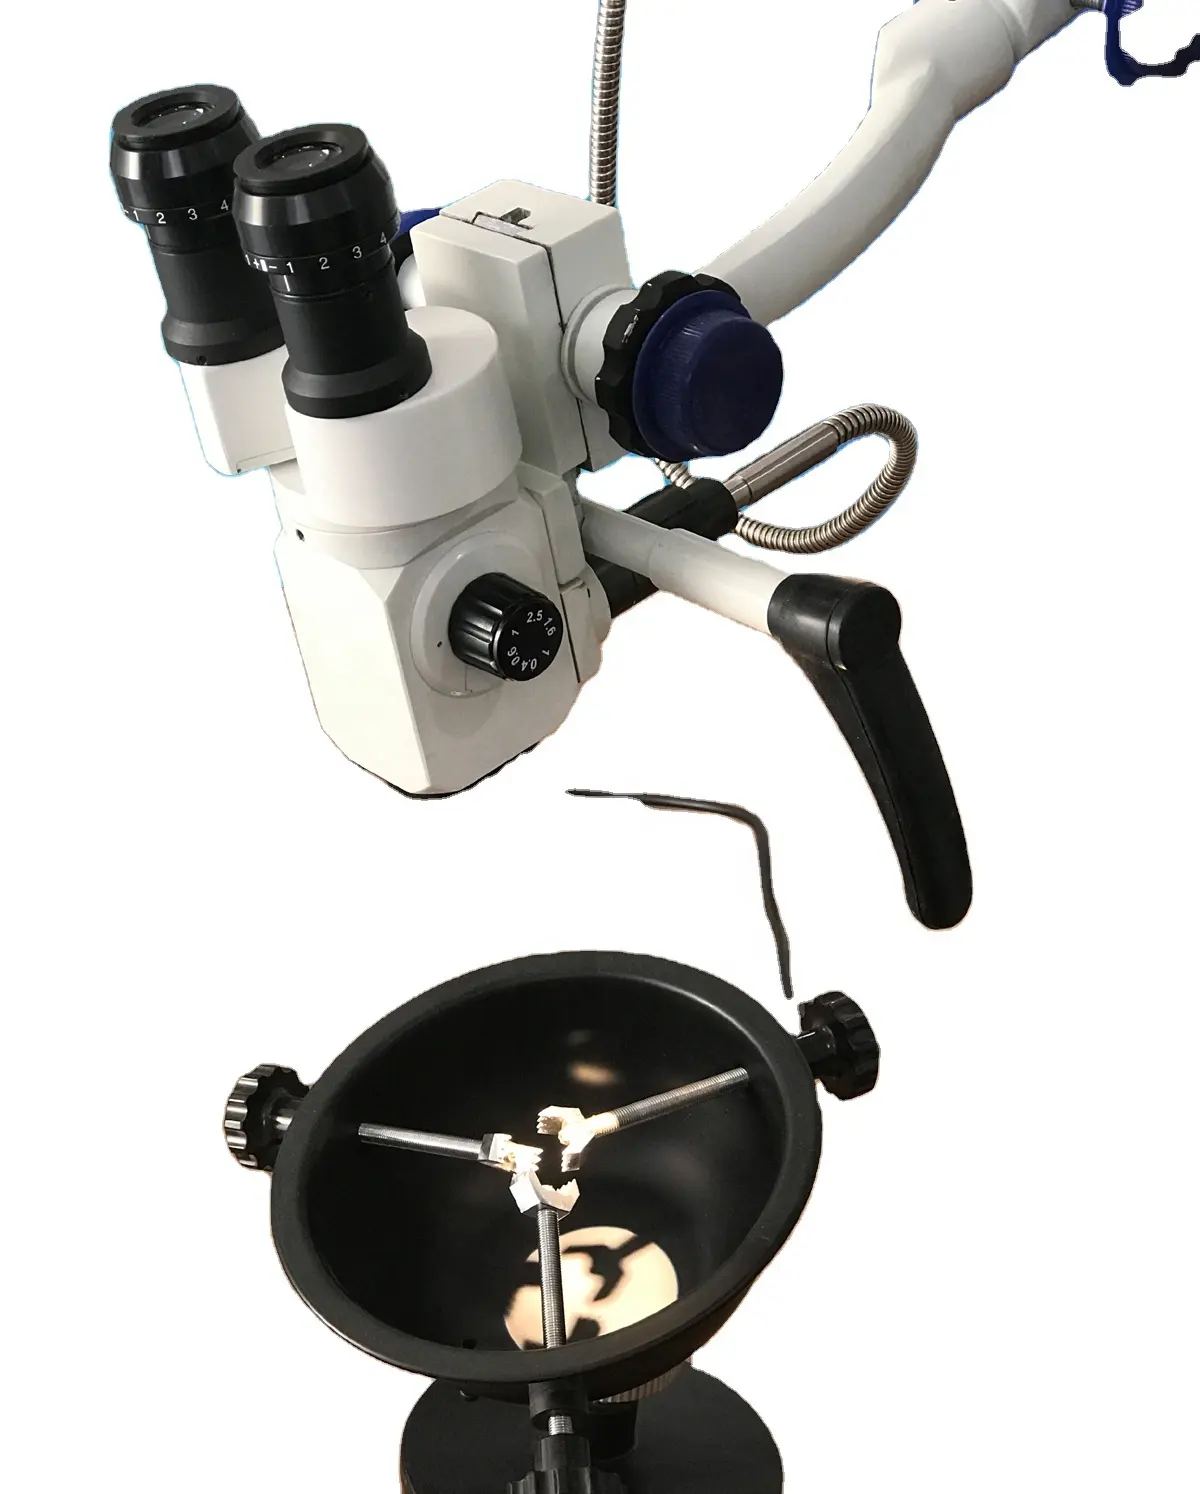 डायरेक्ट फ्रॉम फैक्ट्री टेबल माउंटेड ईएनटी एग्जामिनेशन माइक्रोस्कोप, बिक्री के लिए पोर्टेबल ऑपरेटिंग माइक्रोस्कोप